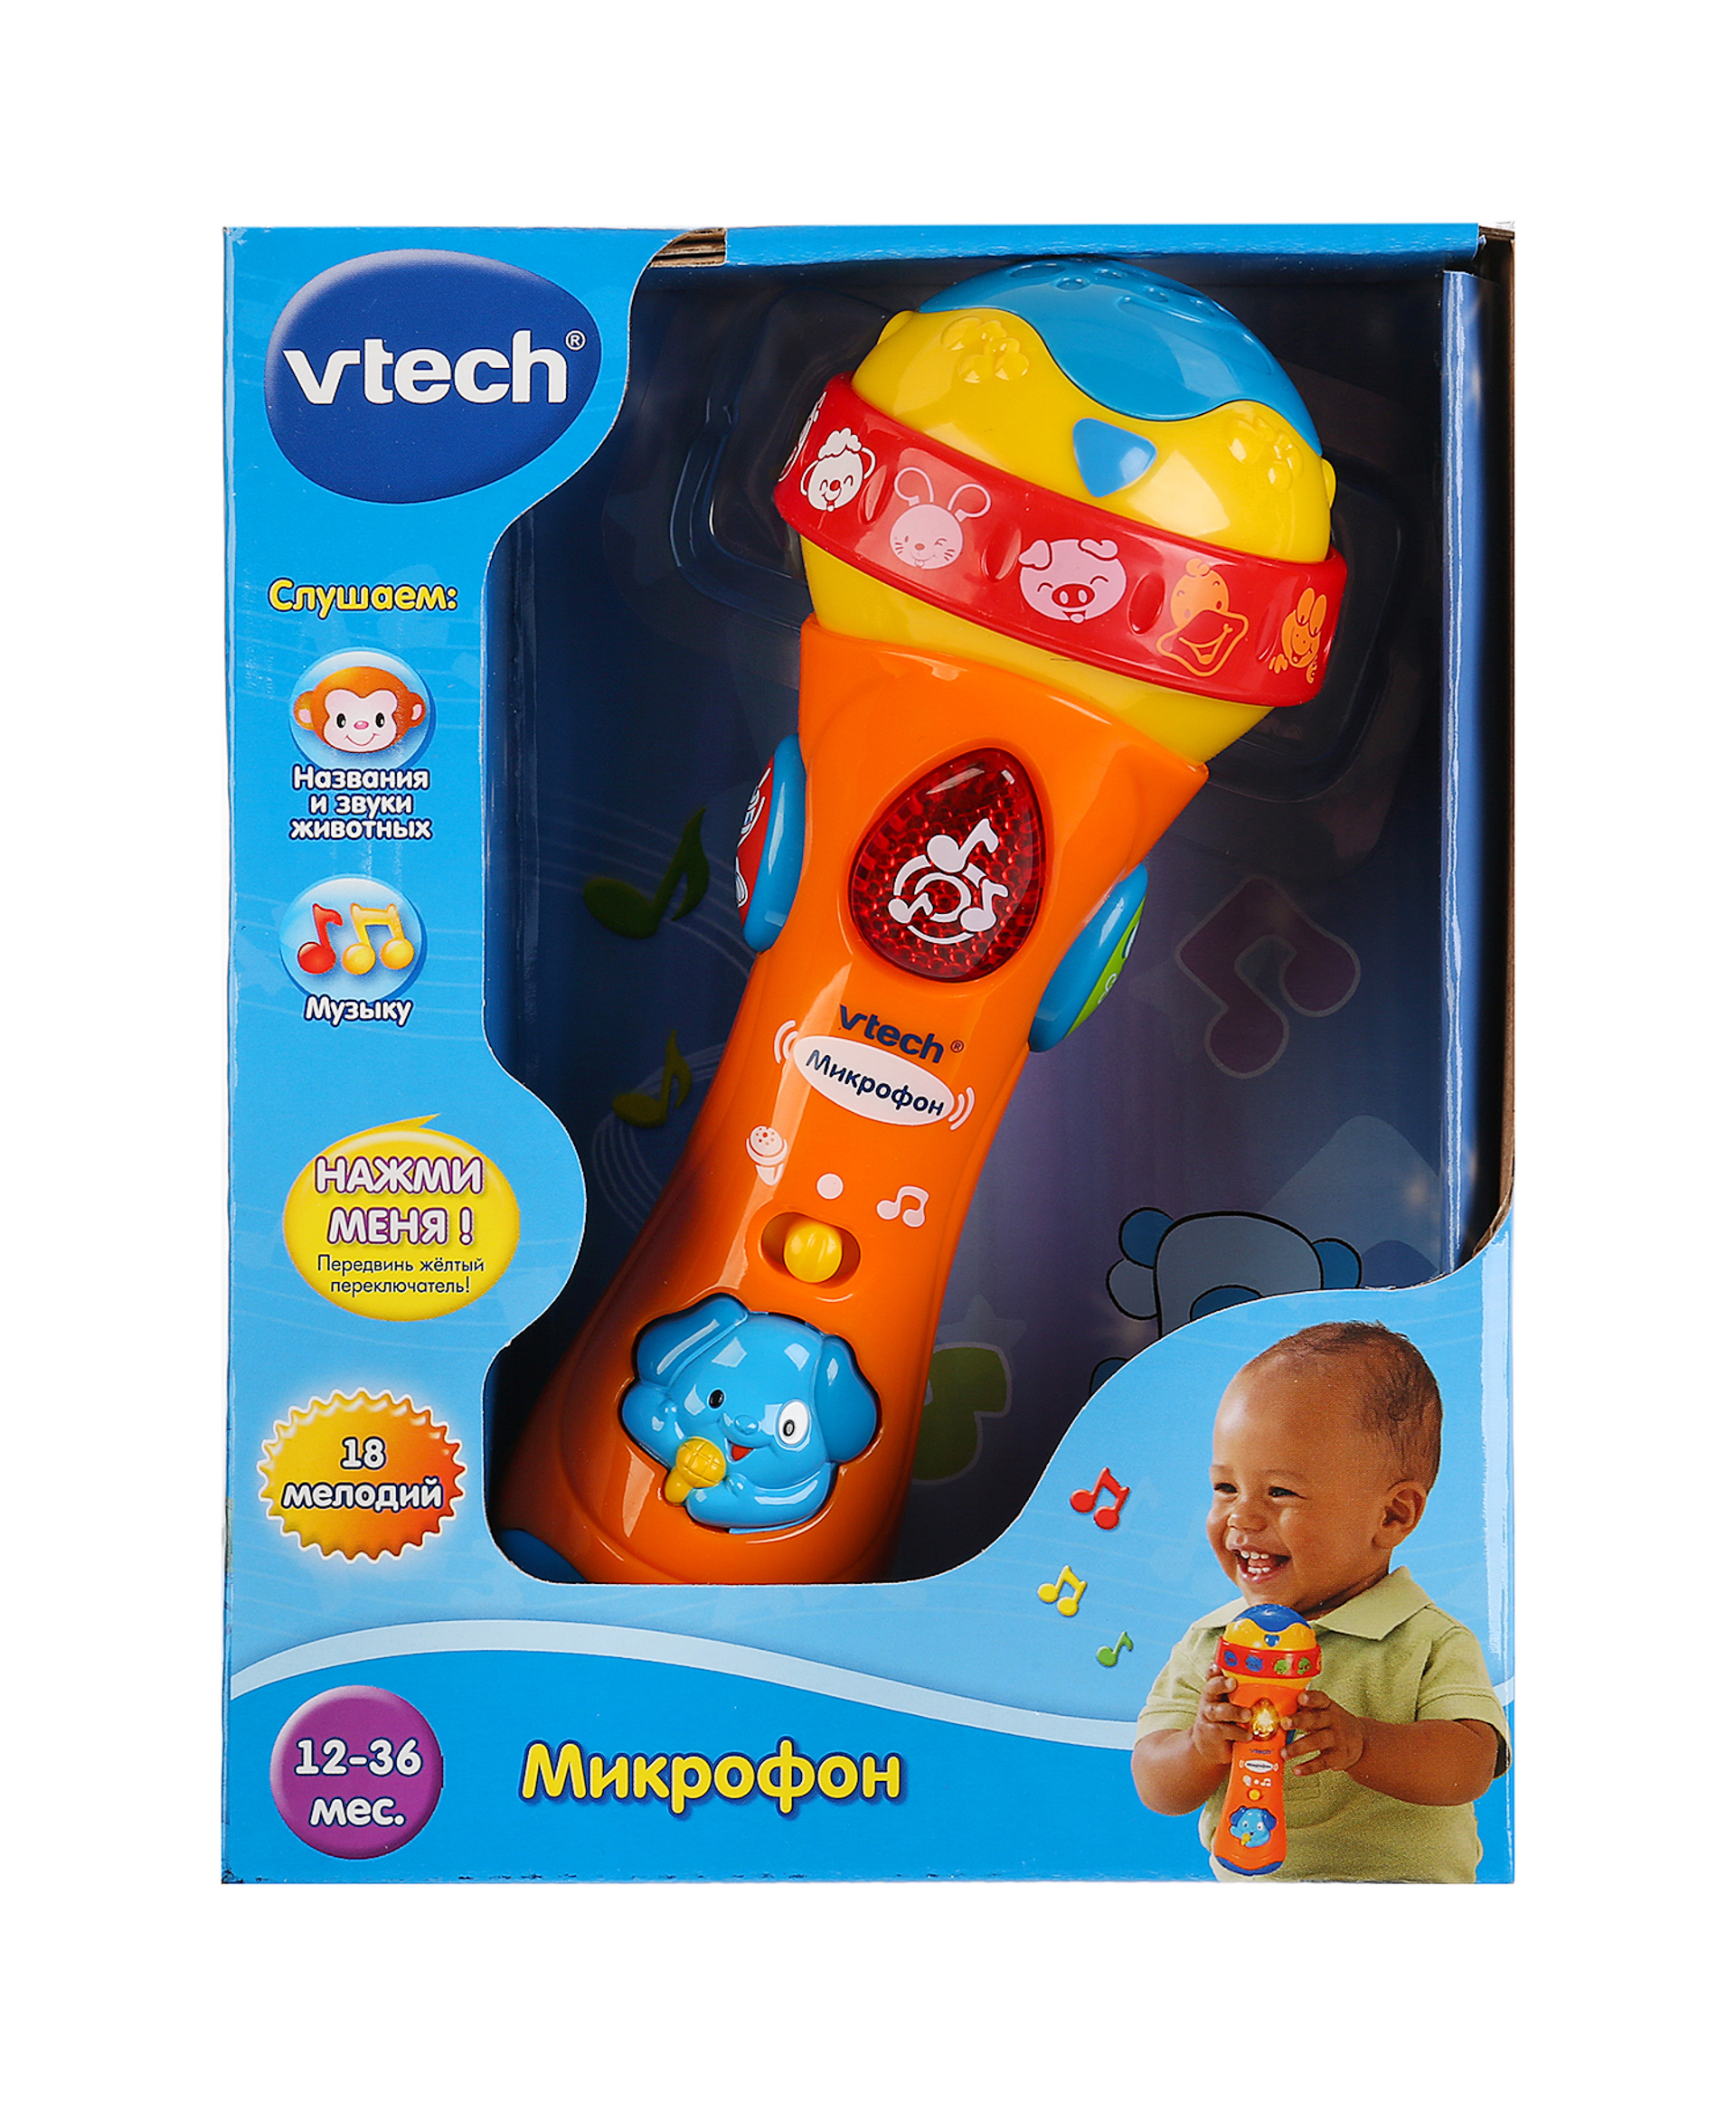 Vtech Развивающая игрушка "Микрофон" со светом 145446 - фото 3